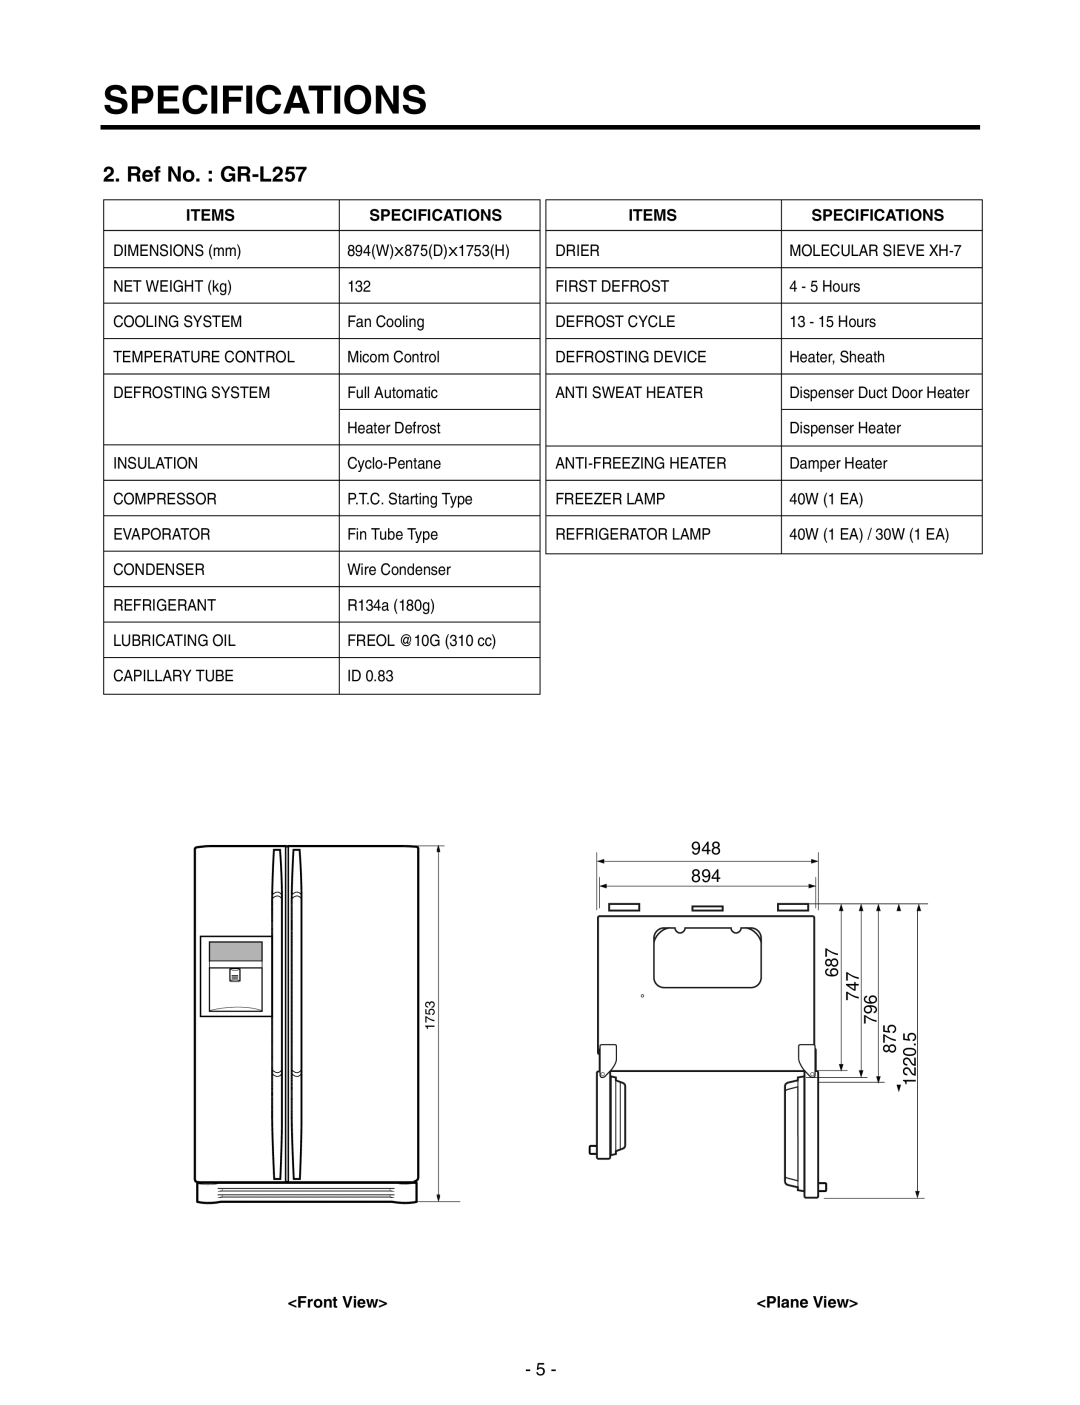 LG Electronics GR-P257/L257, GR-P227/L227 service manual Ref No. GR-L257, Specifications, Items, Front View 